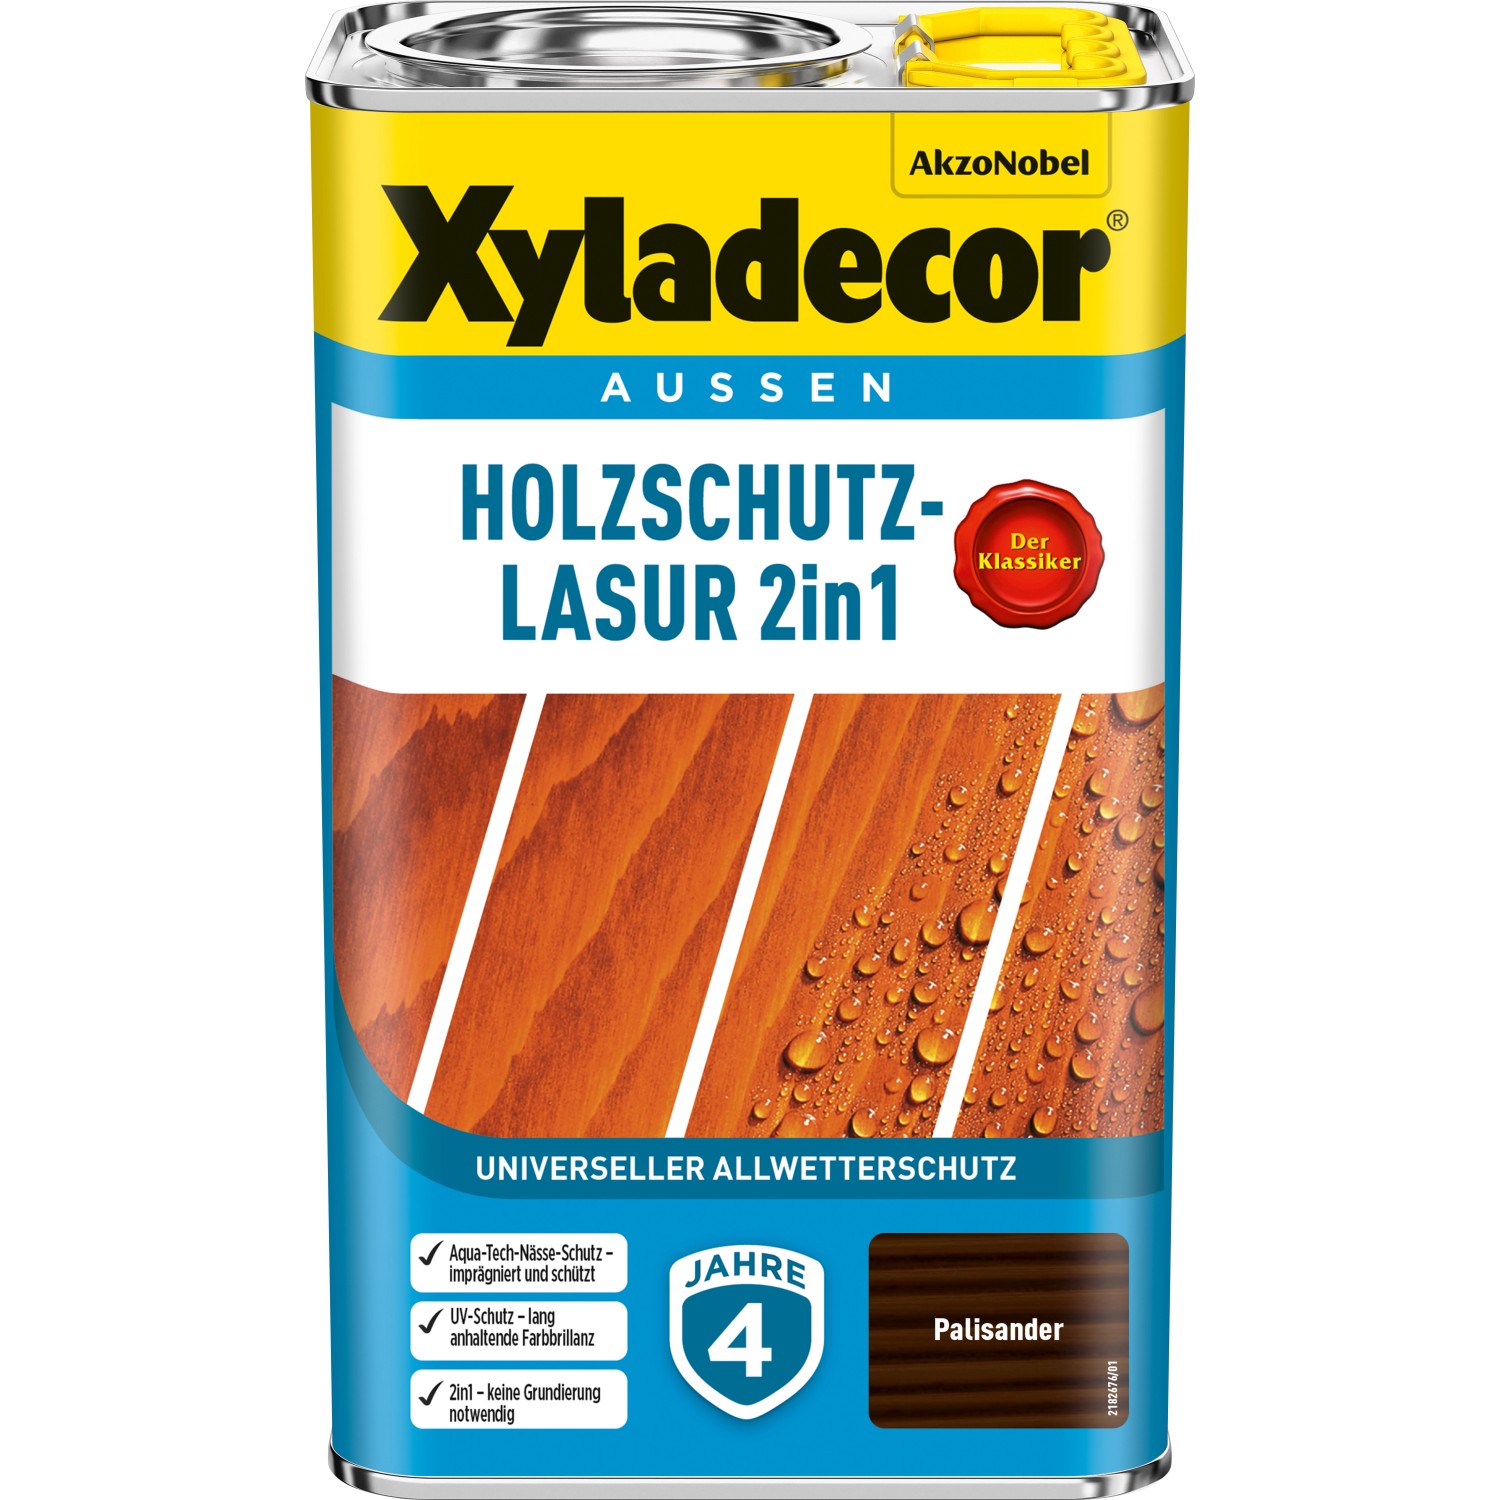 Xyladecor Holzschutz-Lasur 2in1 Palisander matt 2,5 l von Xyladecor